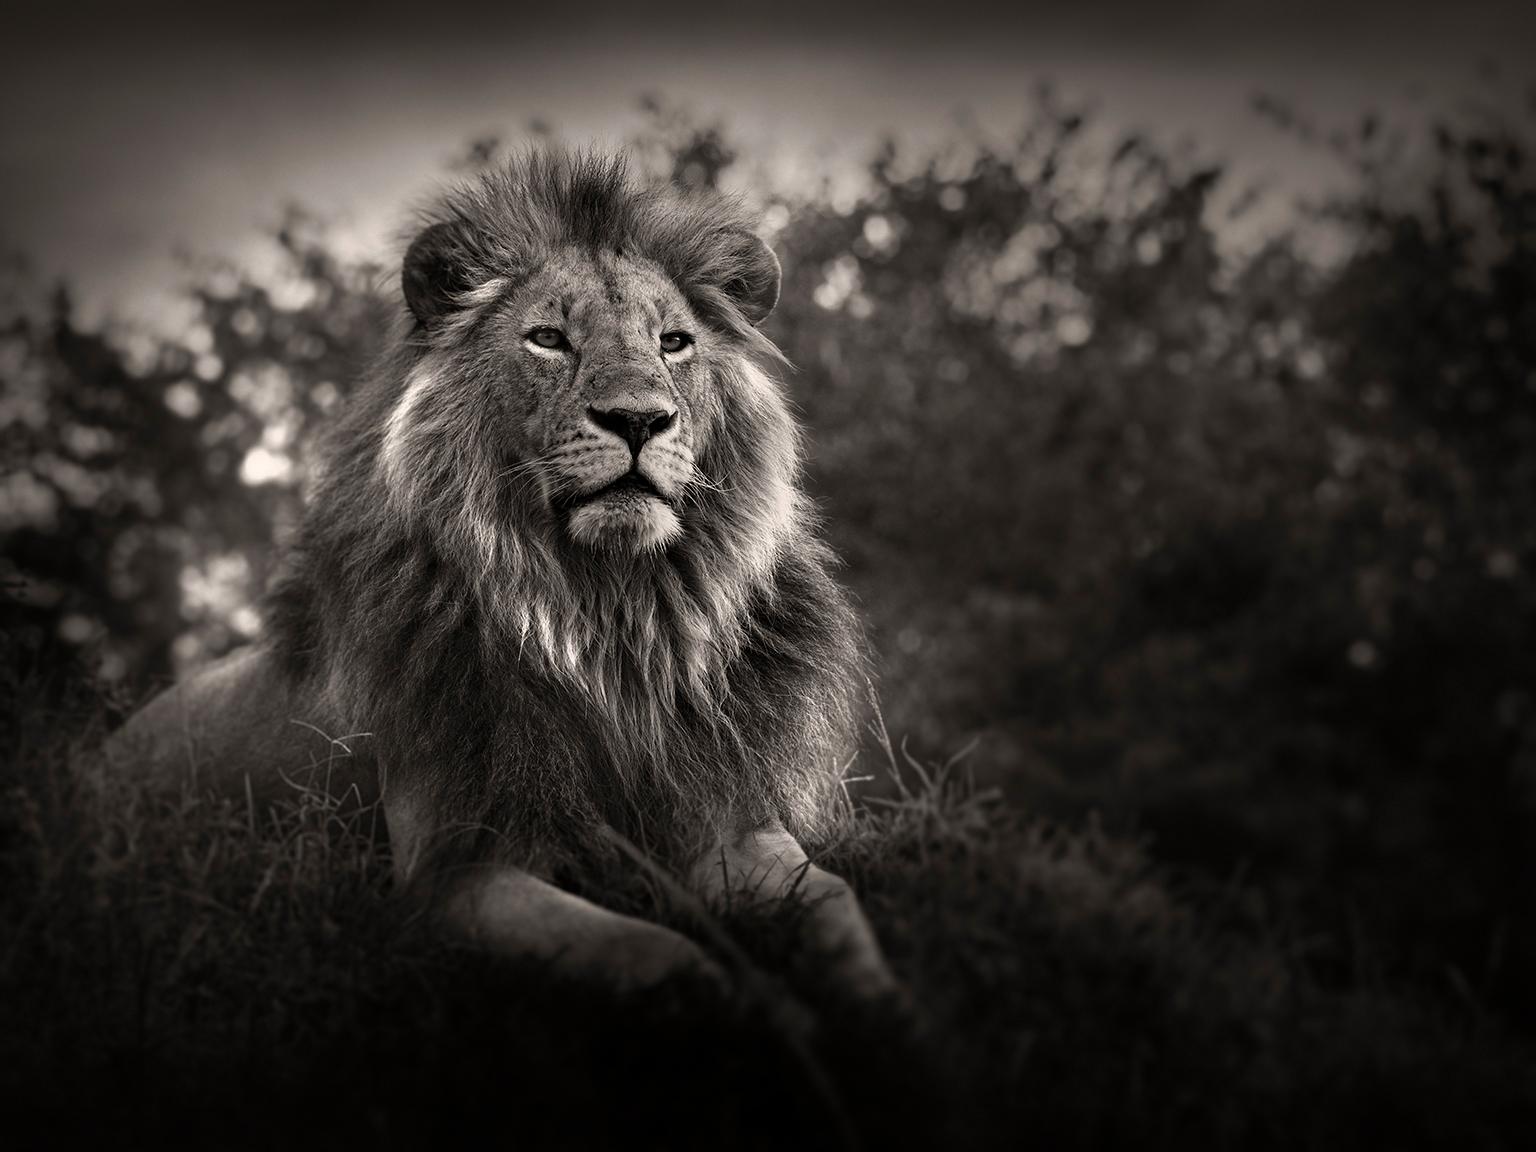 Joachim Schmeisser Portrait Photograph - Orbanoti II, Lion, animal, wildlife, black and white photography